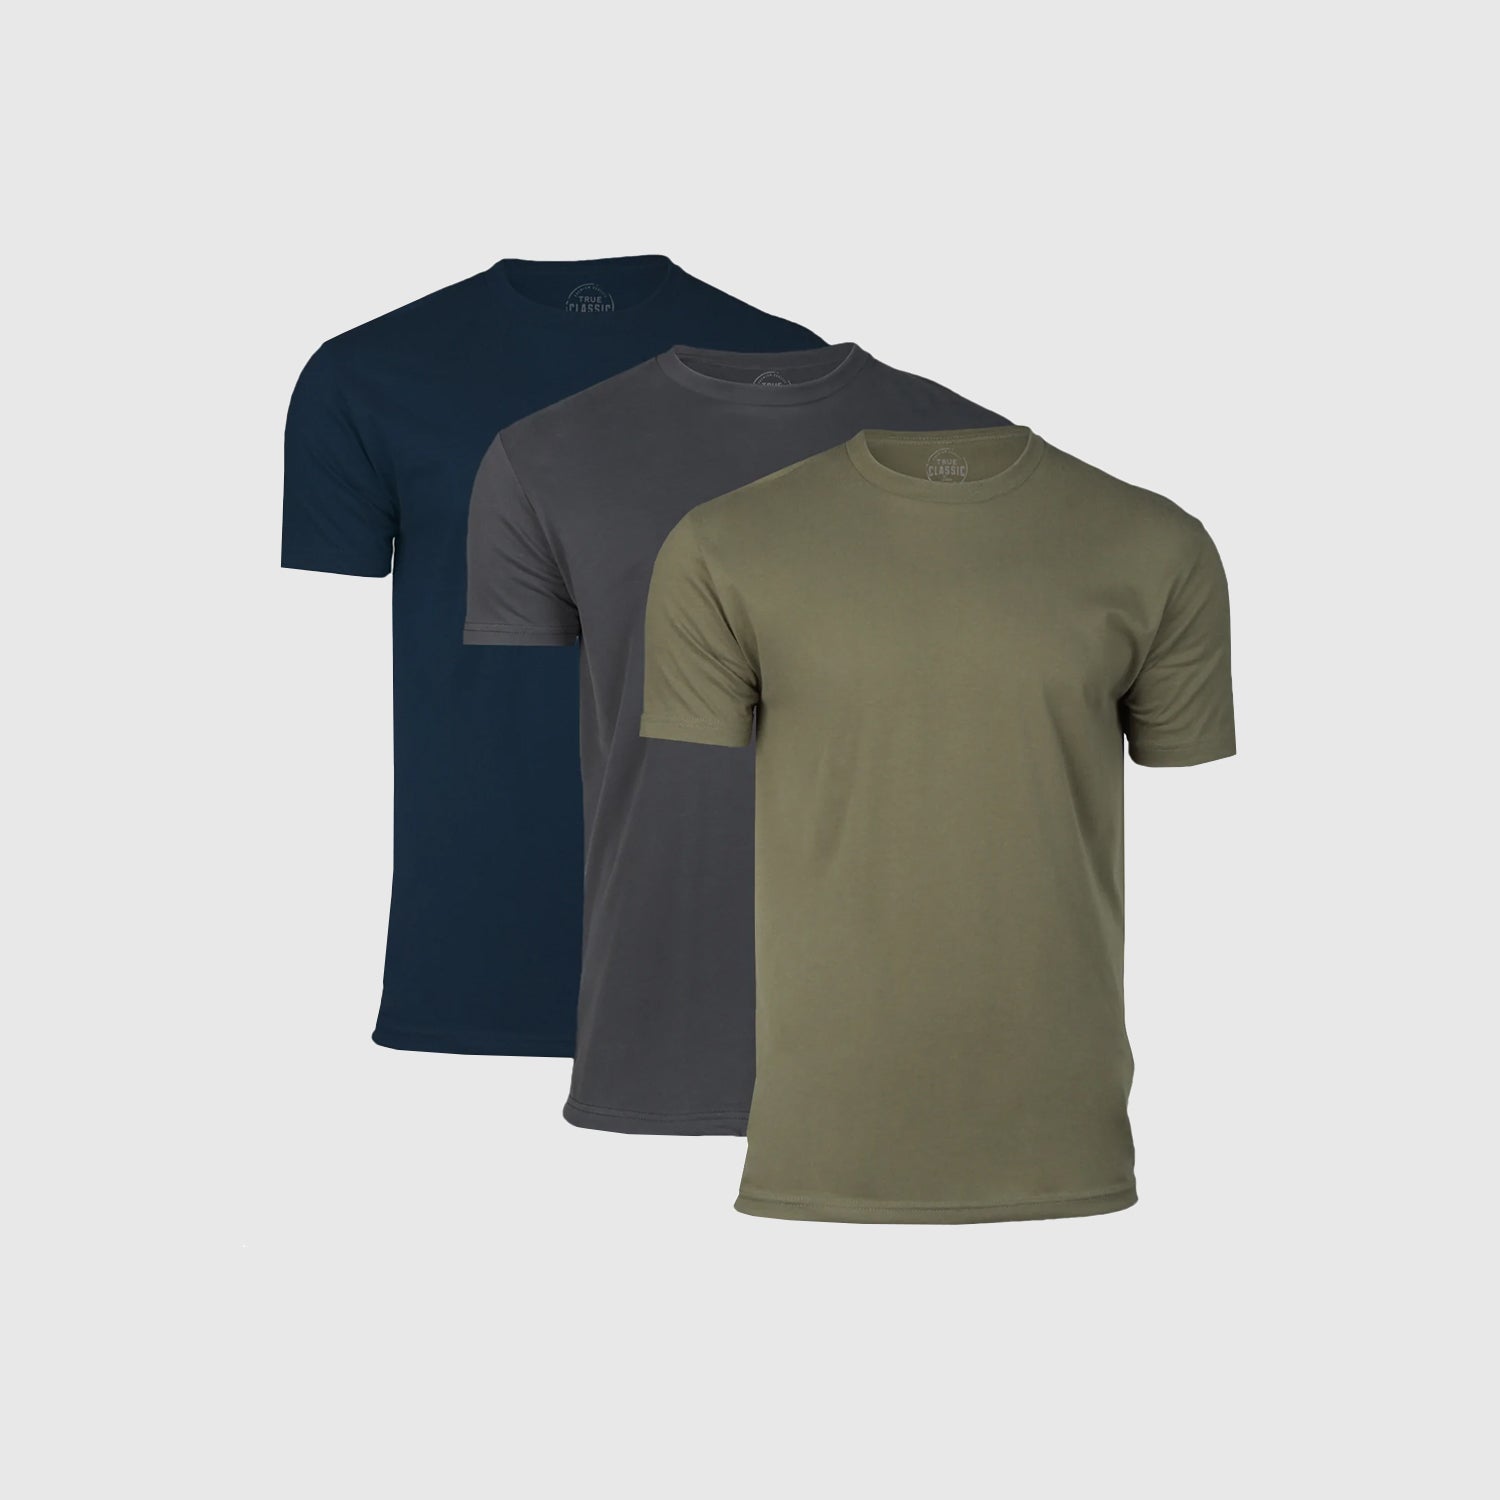 Next Level 3600 Multipack Unisex Bulk Bundle Cotton Short Sleeve Crewneck T- Shirt 3 Pack - Make Your Own Assorted Color Set, X-Small